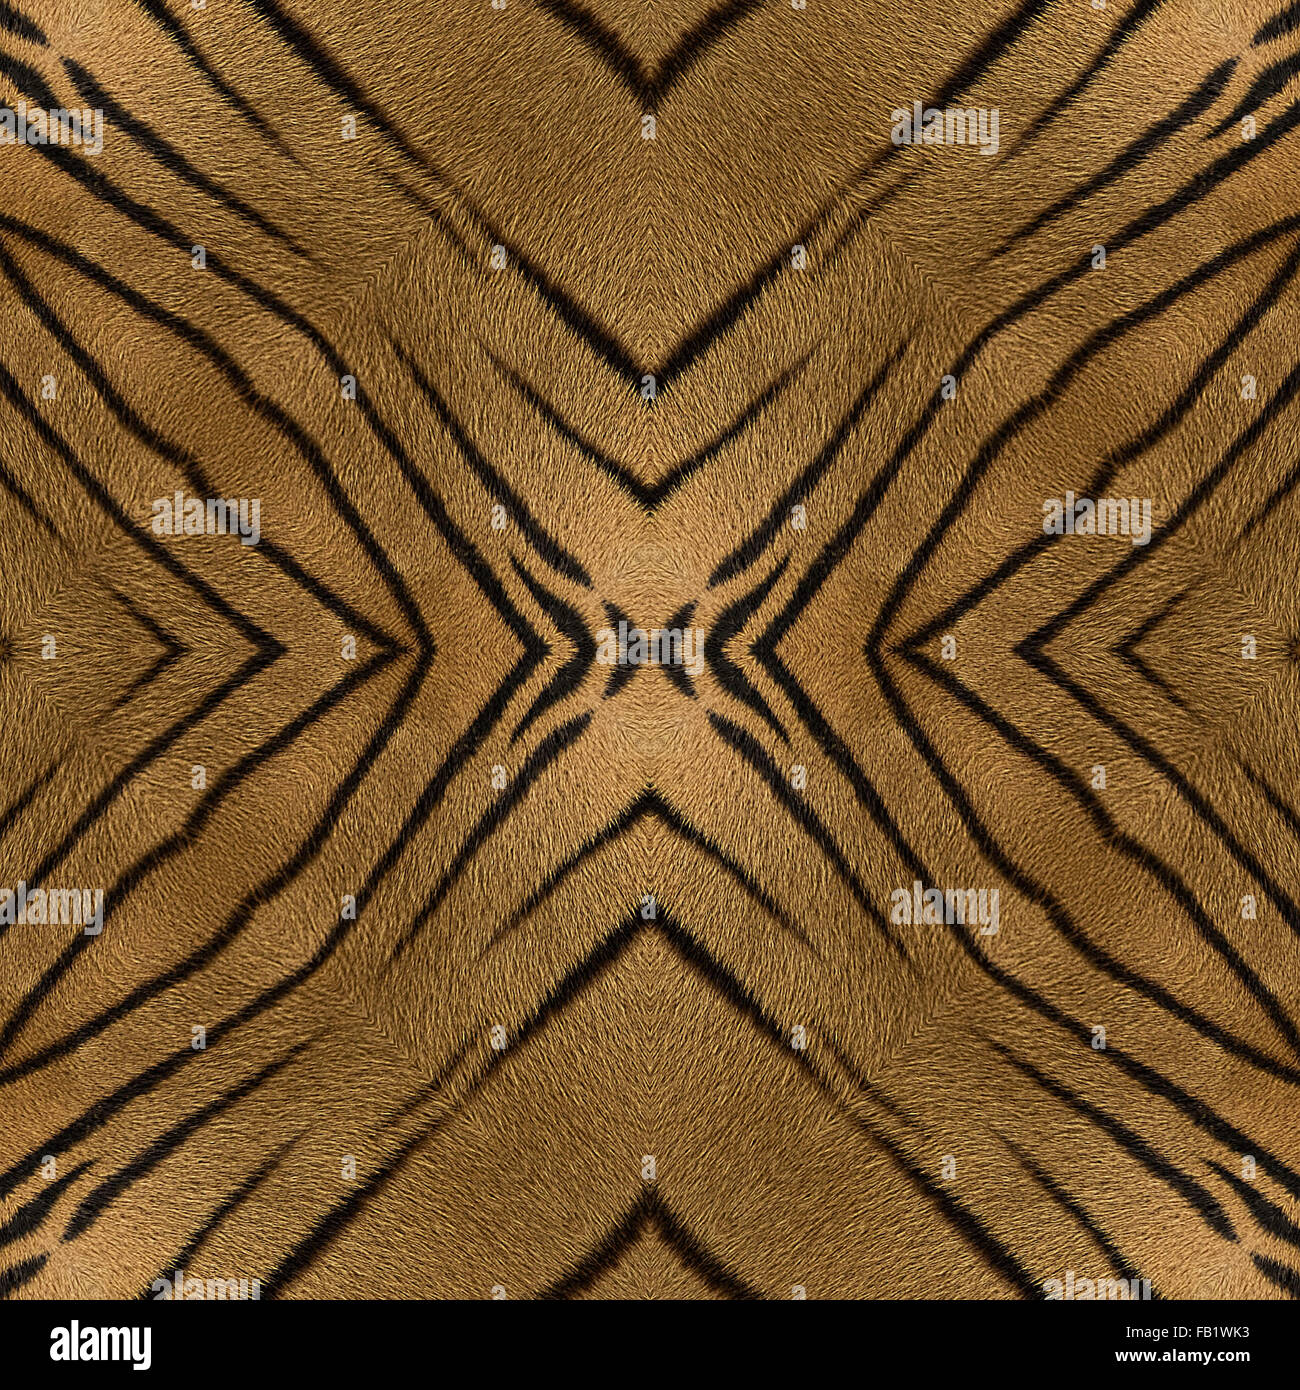 Oriental seamless pattern based on tiger stripes. Stock Photo